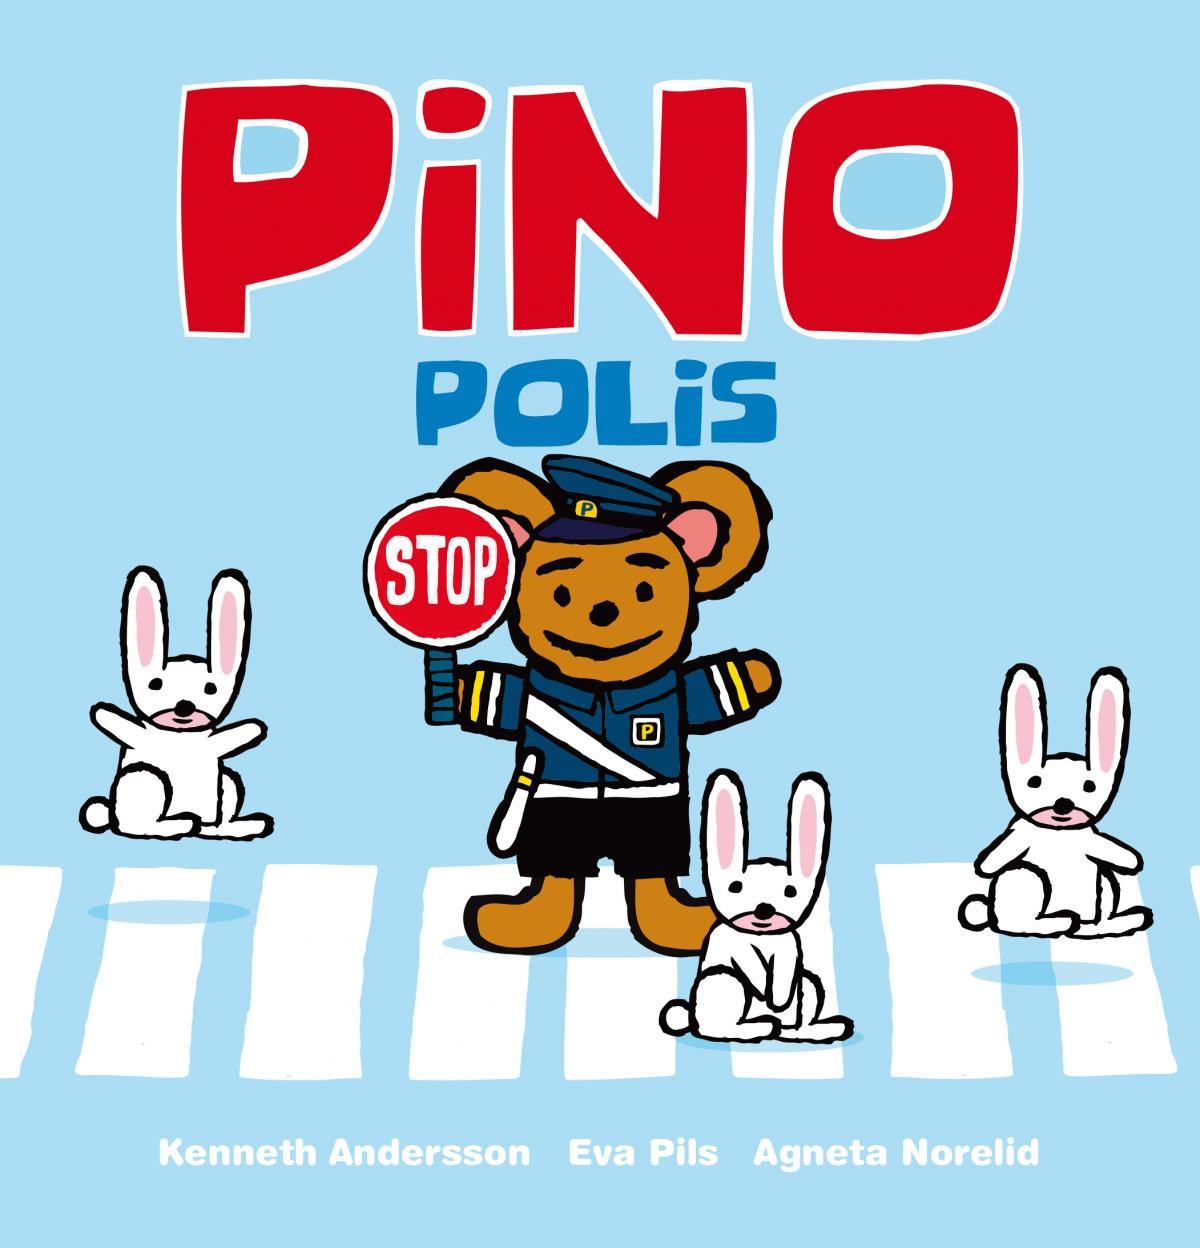 Pino polis